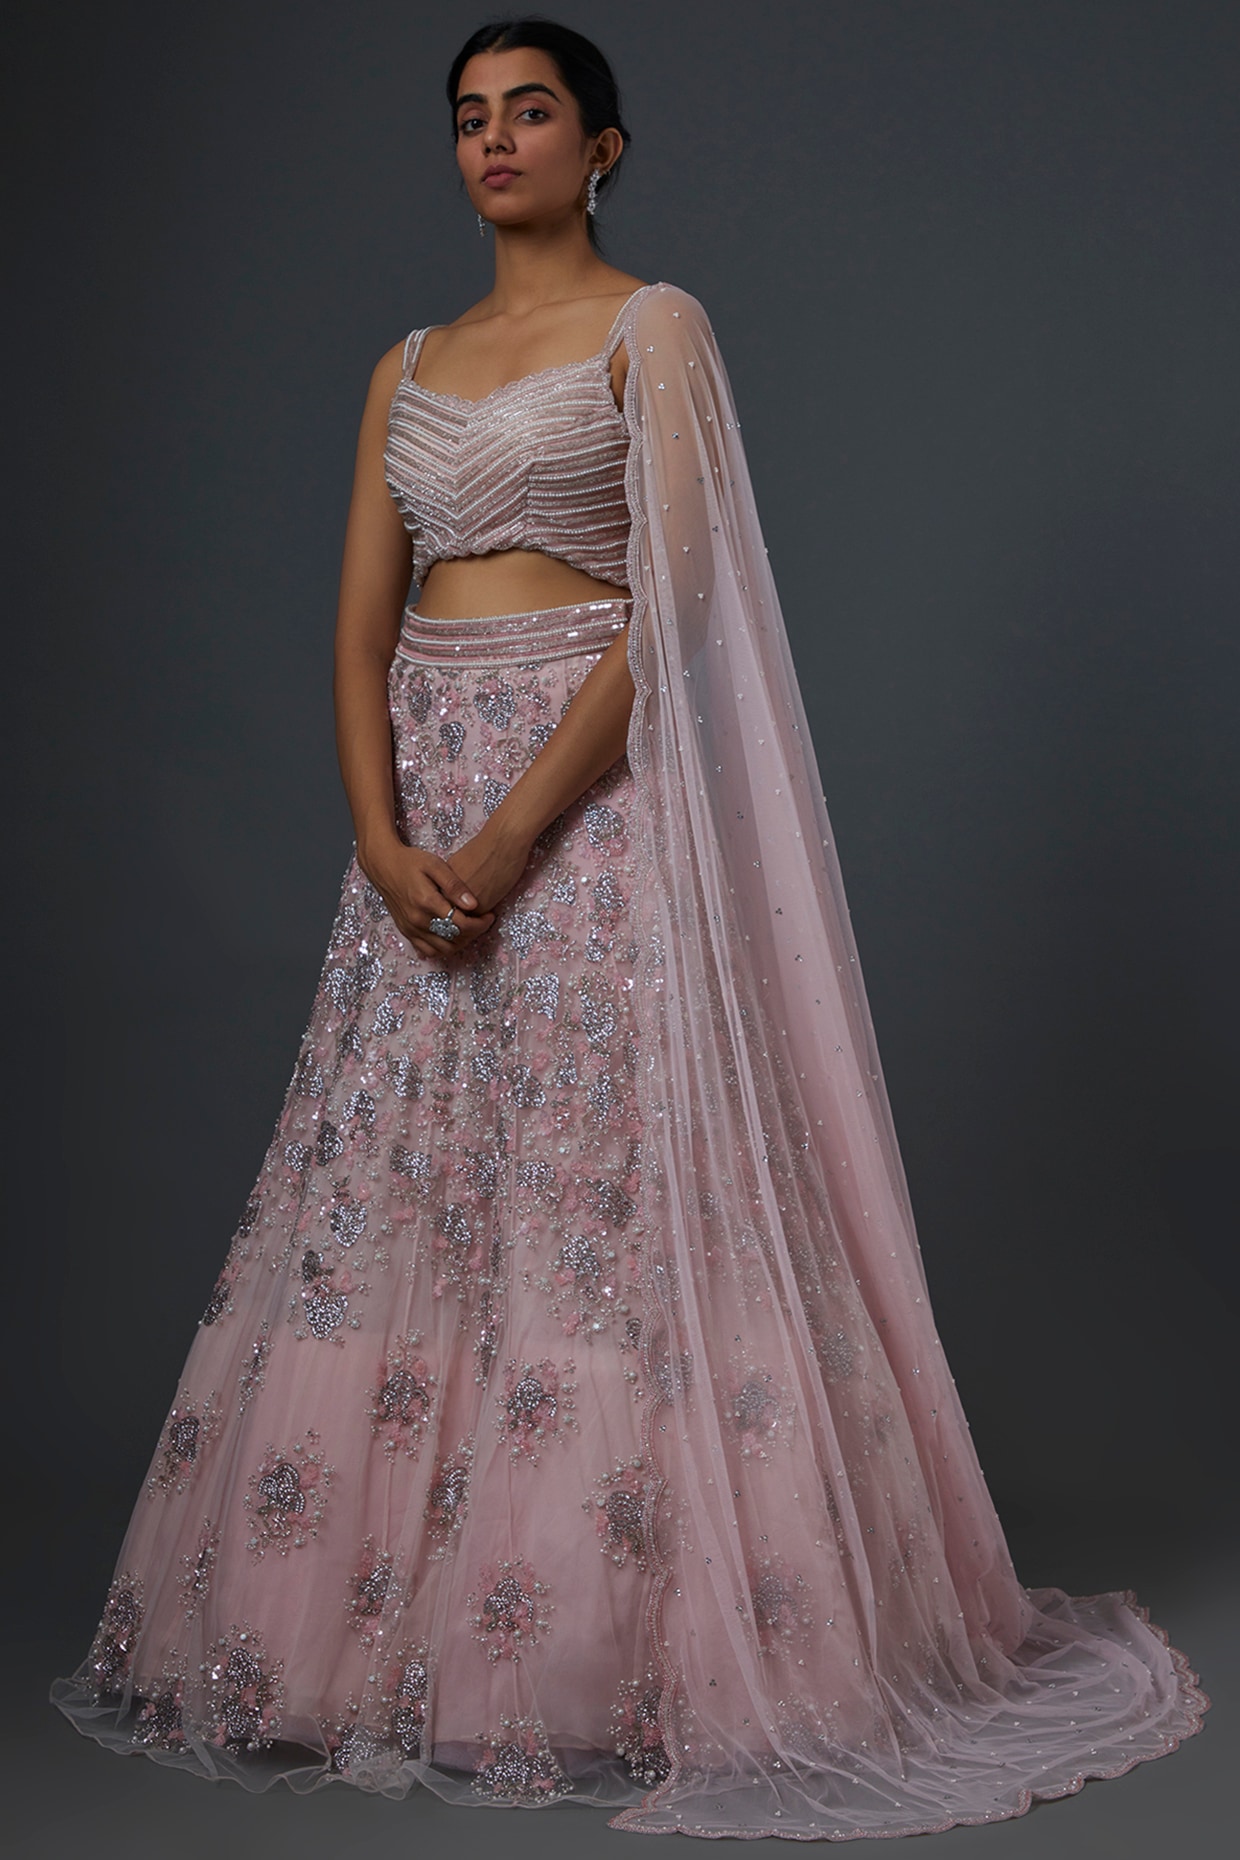 Fashion designer Natasha Dalal's pre-wedding white dress costs nearly Rs  6,000 only